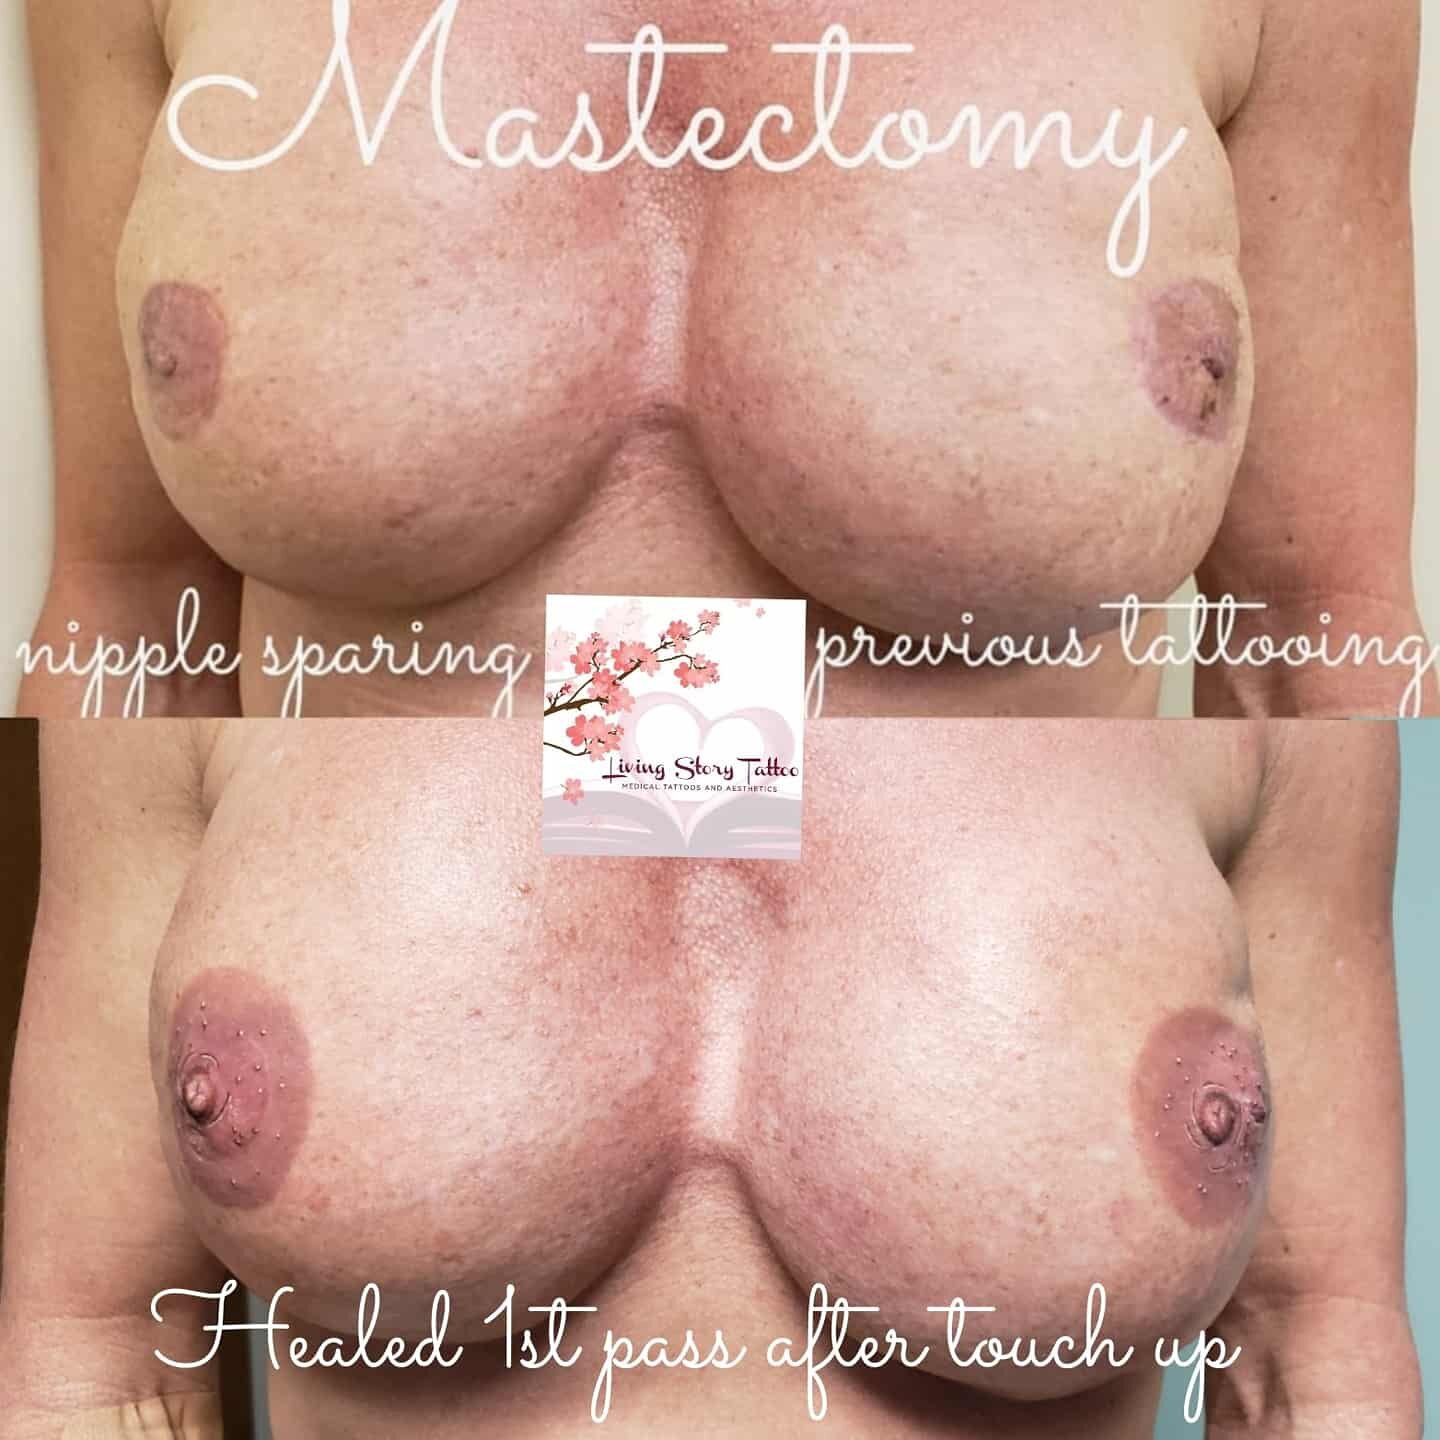 Bilateral corrective nipple sparing 